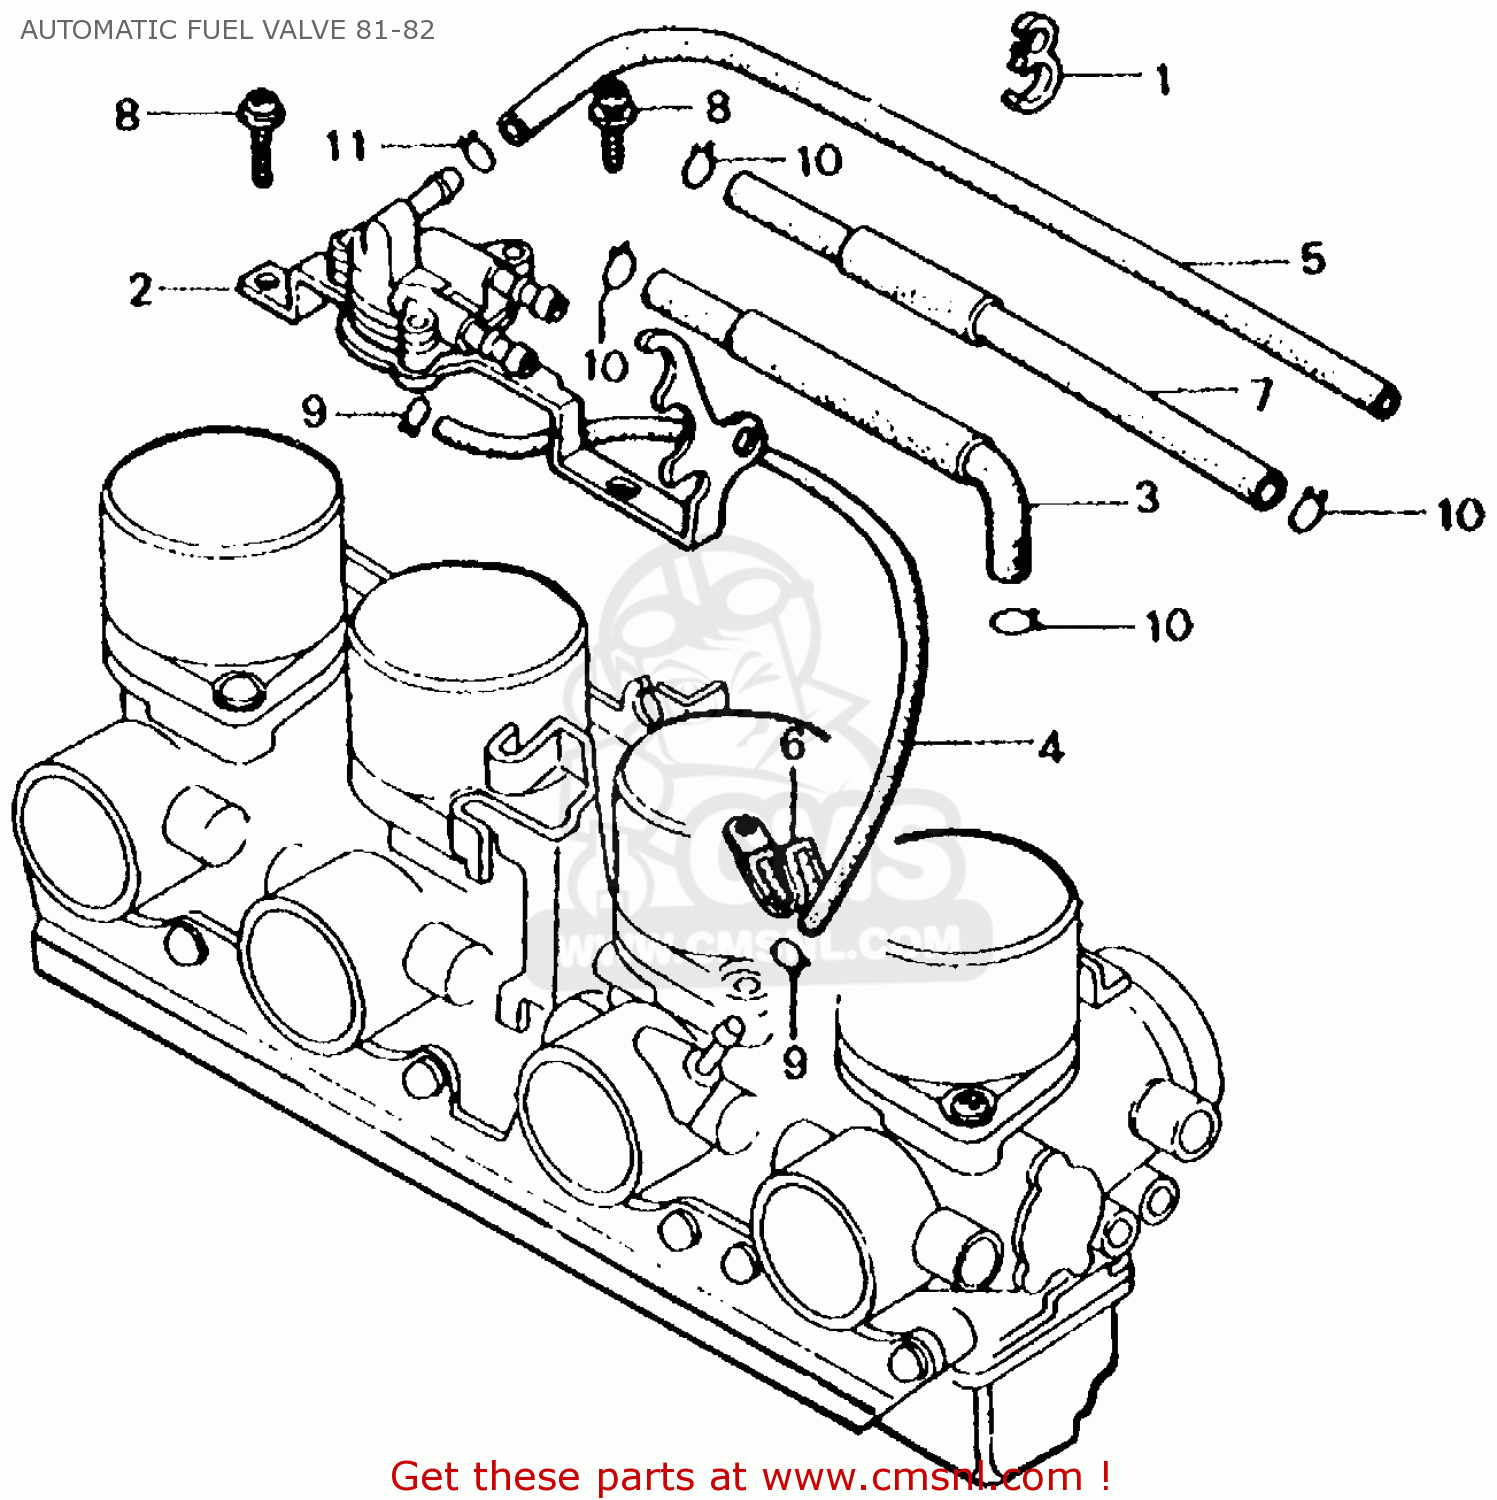 honda-cb750f-750-super-sport-1981-b-usa-automatic-fuel-valve-81-82_bighu0129e5z19_8cbf.gif